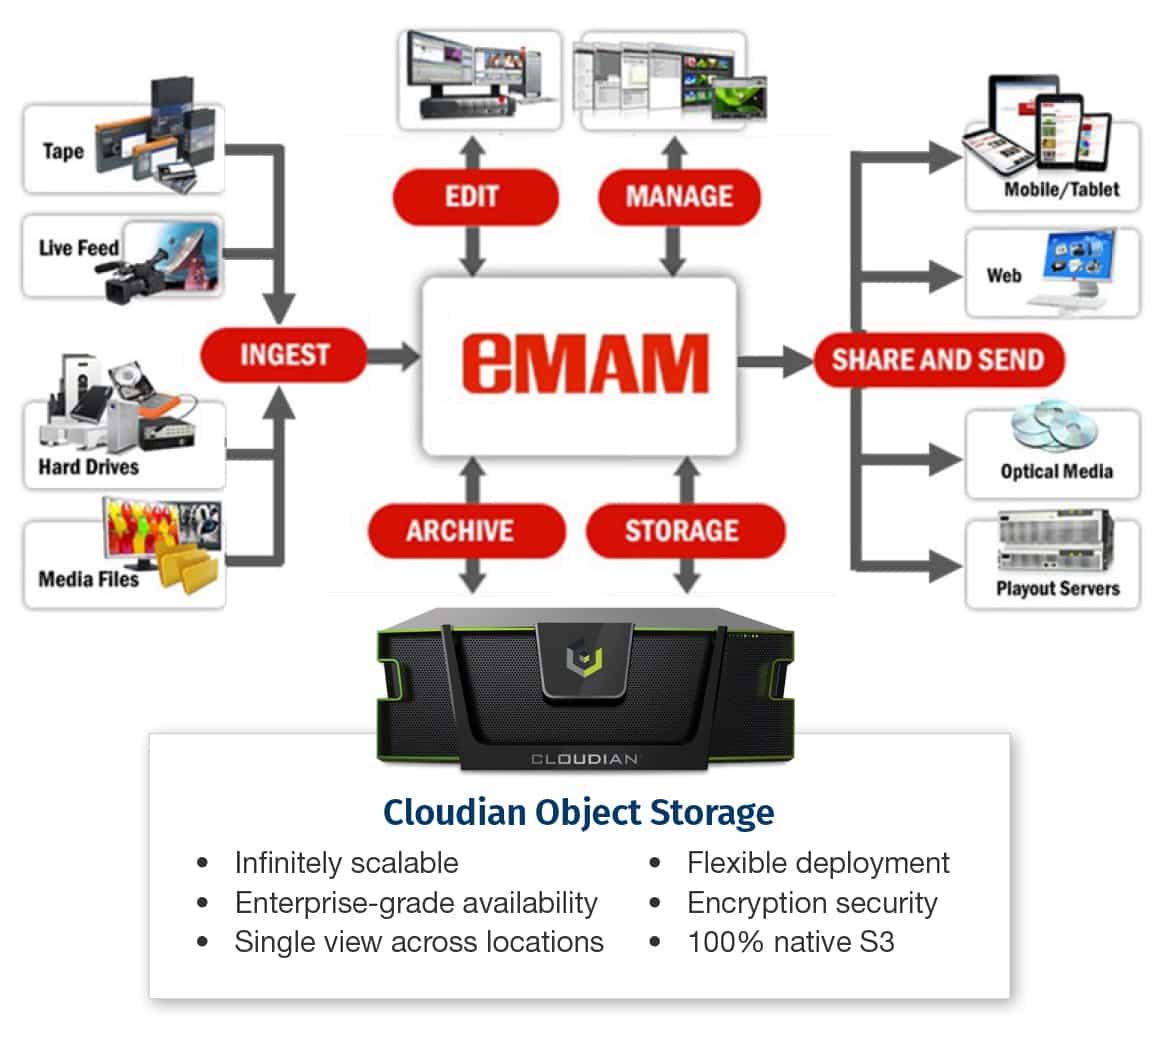 eMAM and Cloudian media asset management